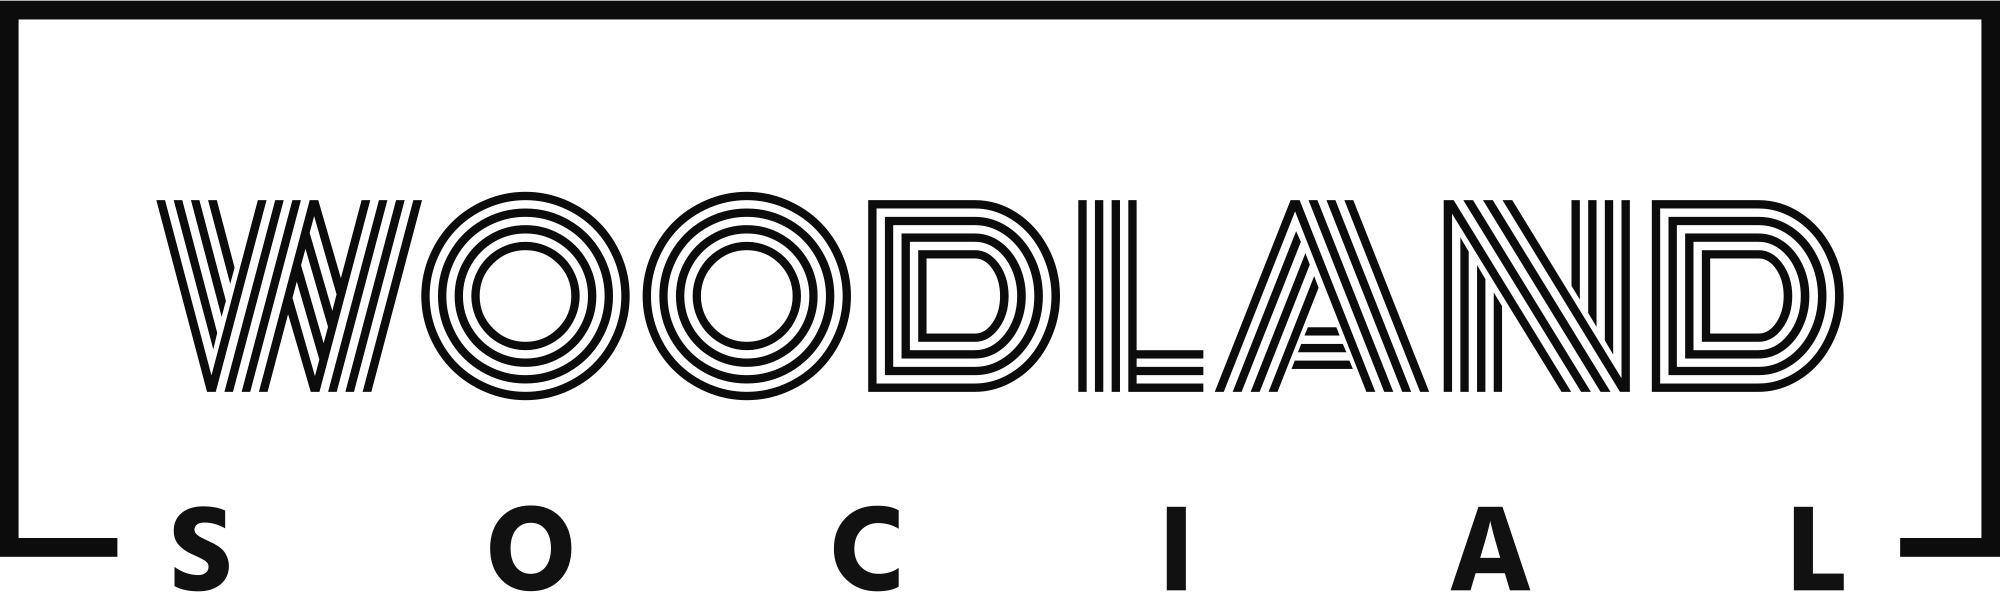 Woodland Social logo top - Homepage